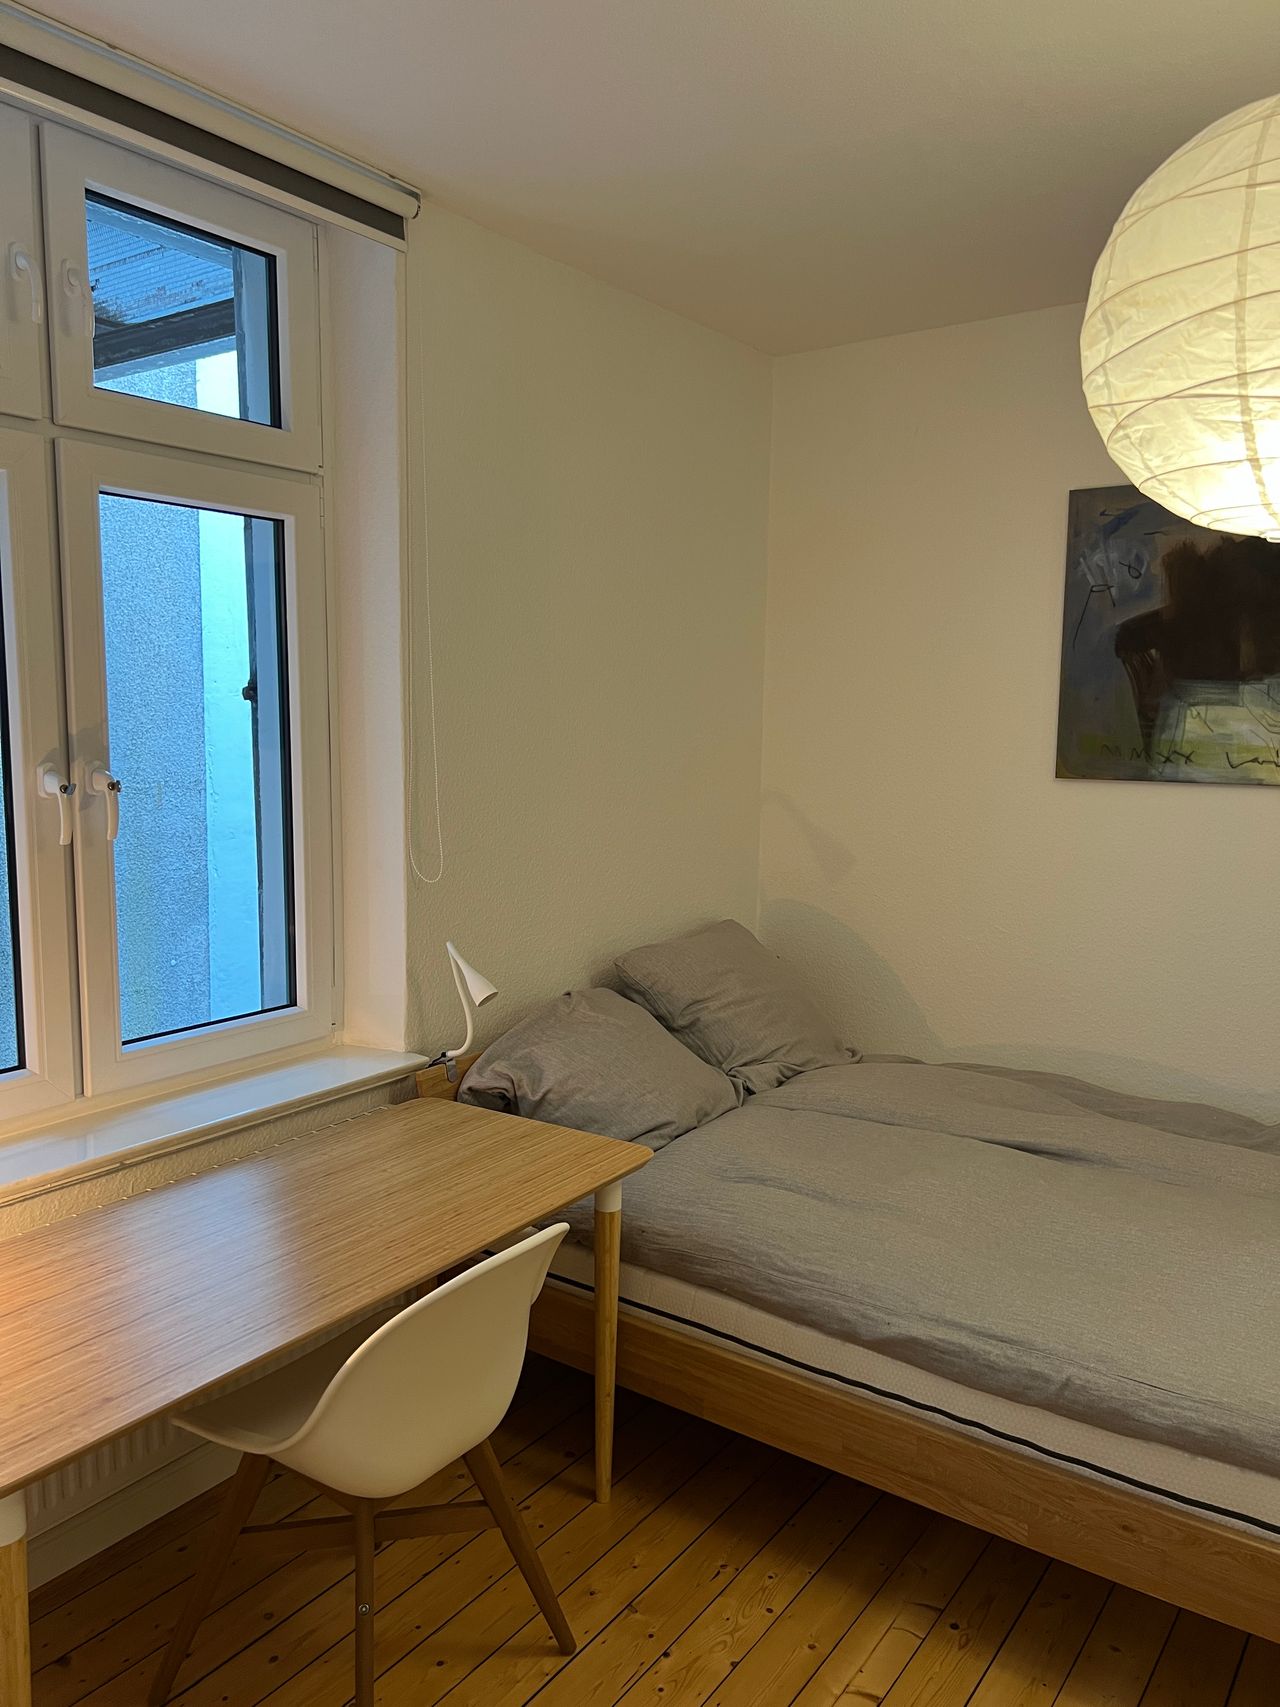 Wonderful furnished bright top floor flat *ALL-Inclusive* near Kesselbrink, 4 rooms, new kitchen, 2 bathrooms